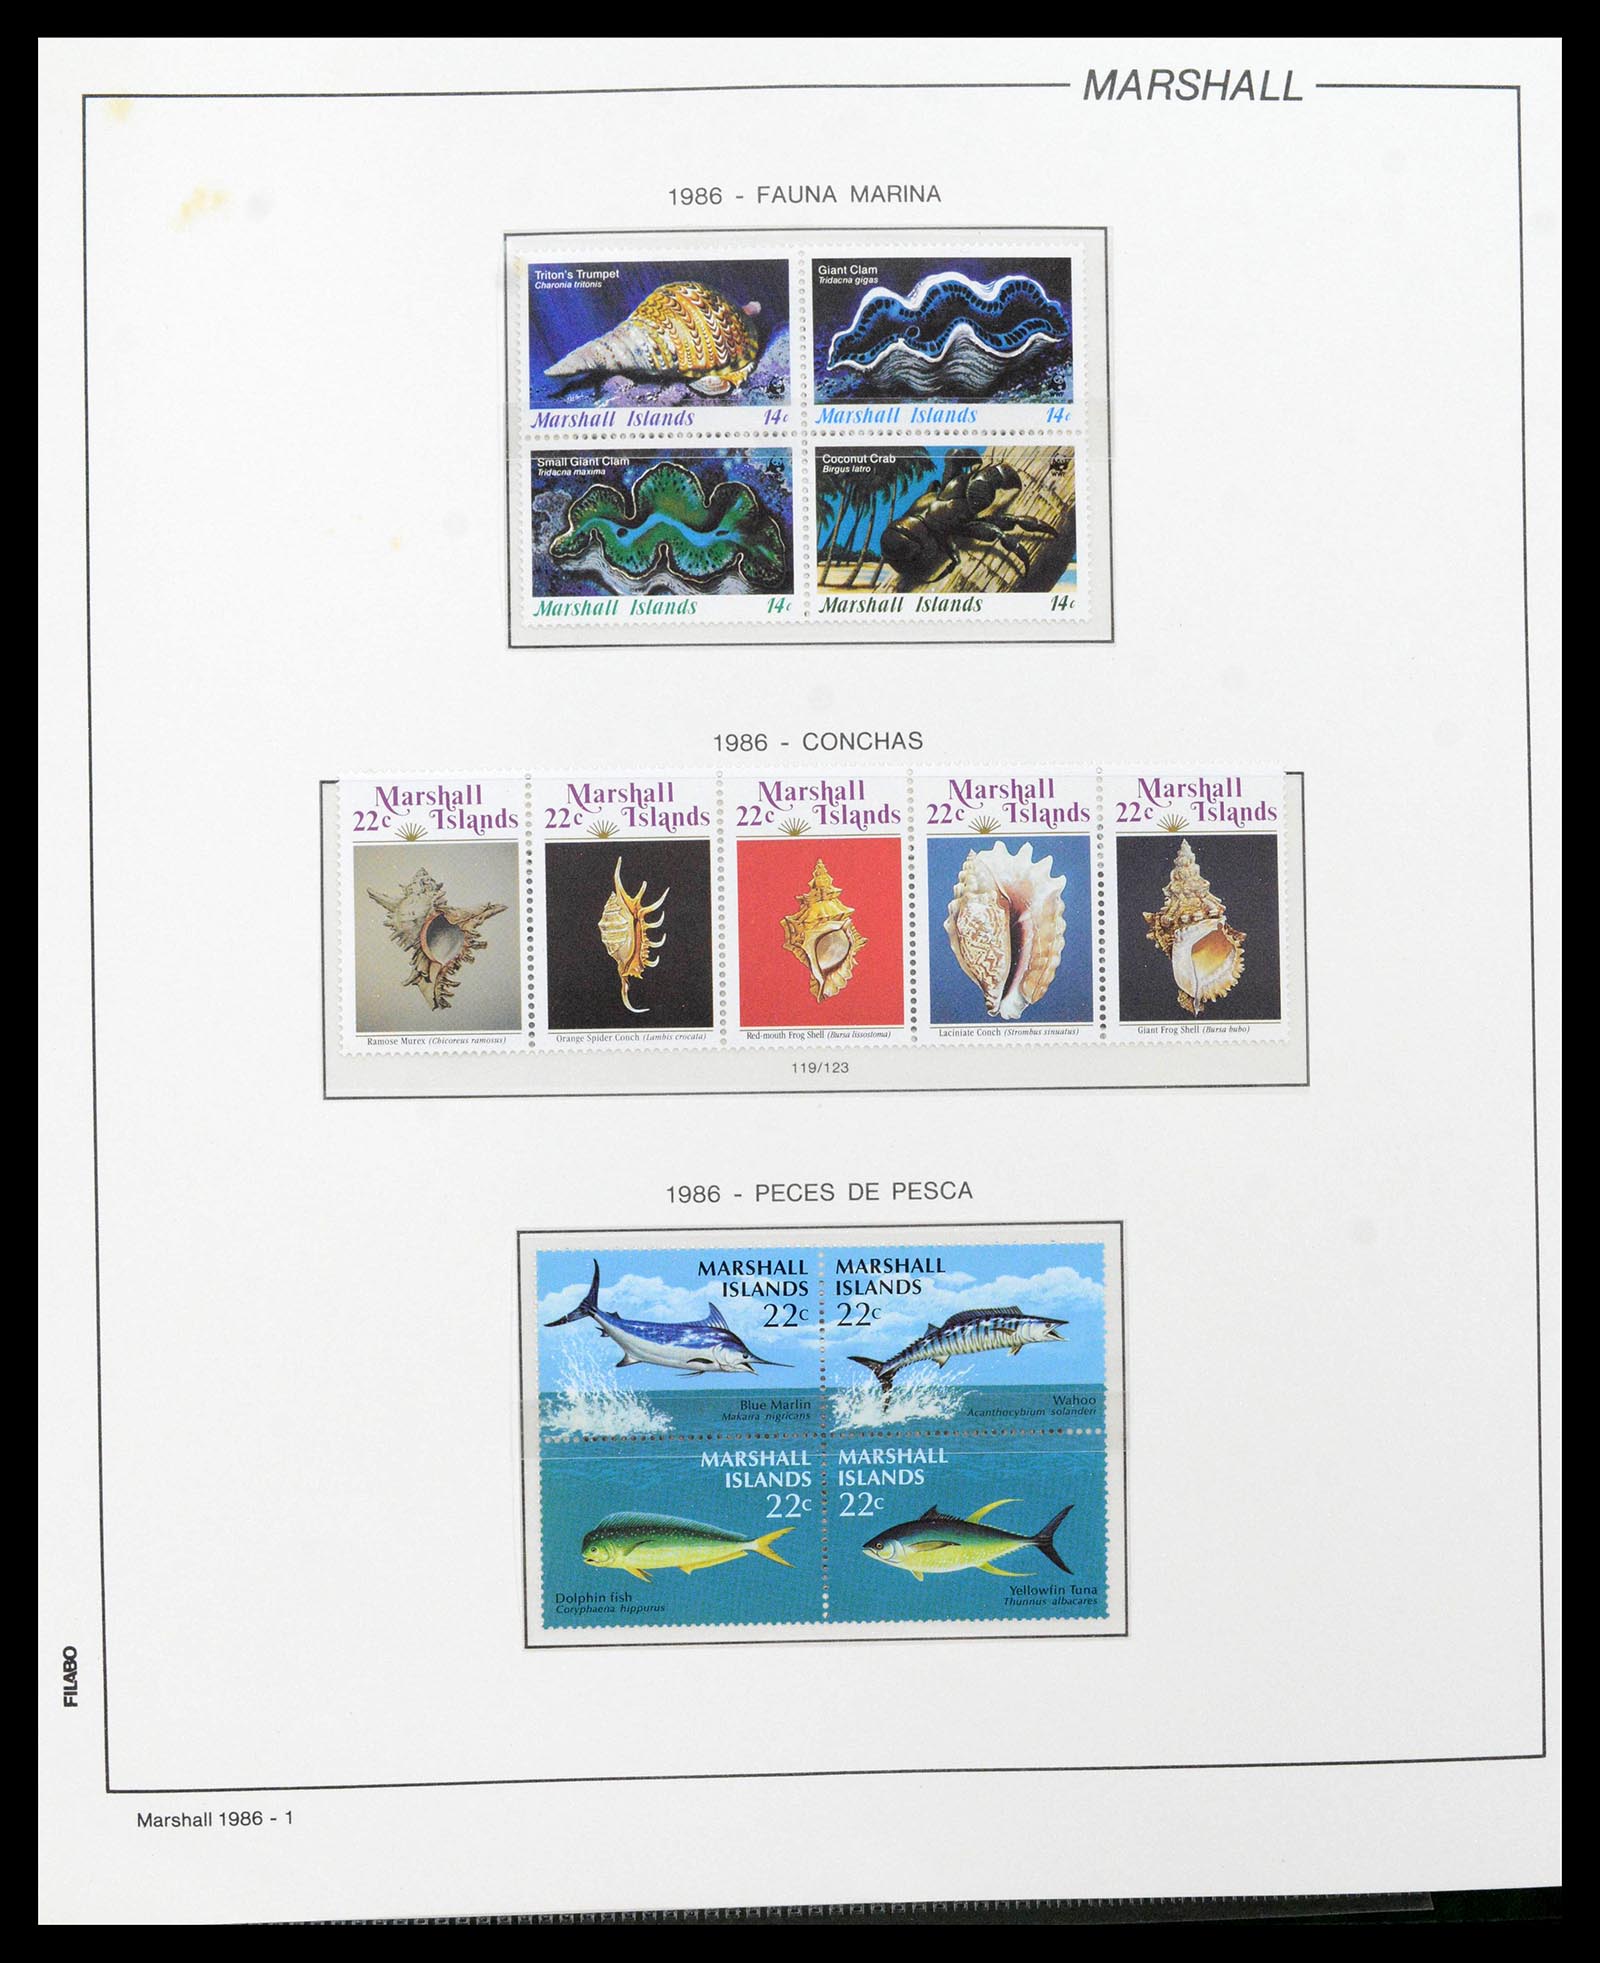 39222 0118 - Stamp collection 39222 Palau, Micronesia and Marshall islands 1980-1995.